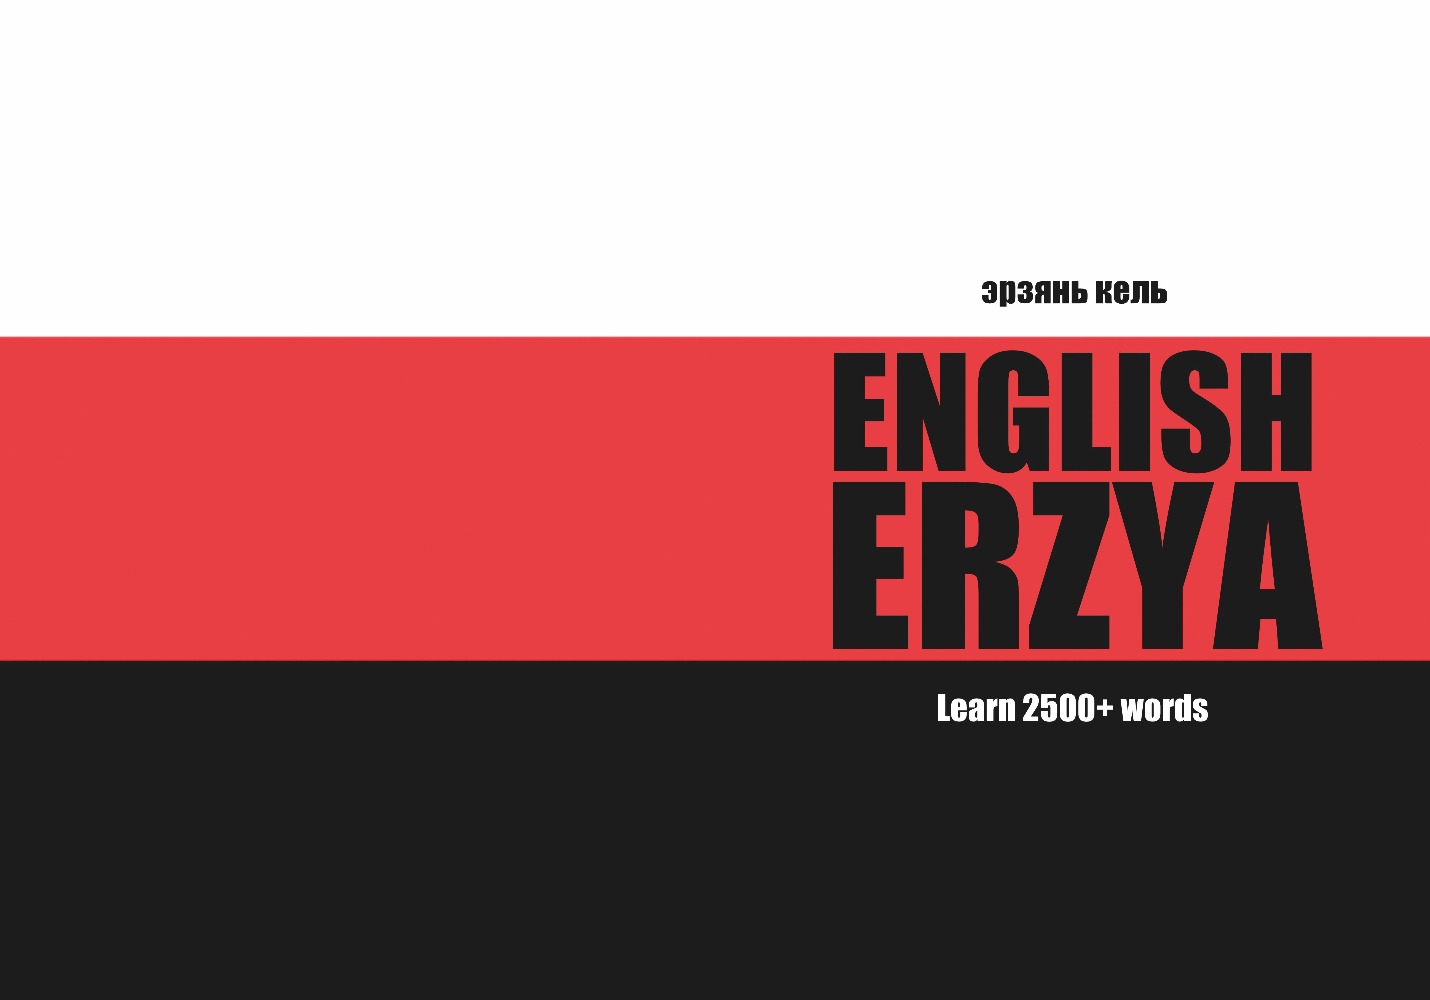 Erzya language learning notebook cover